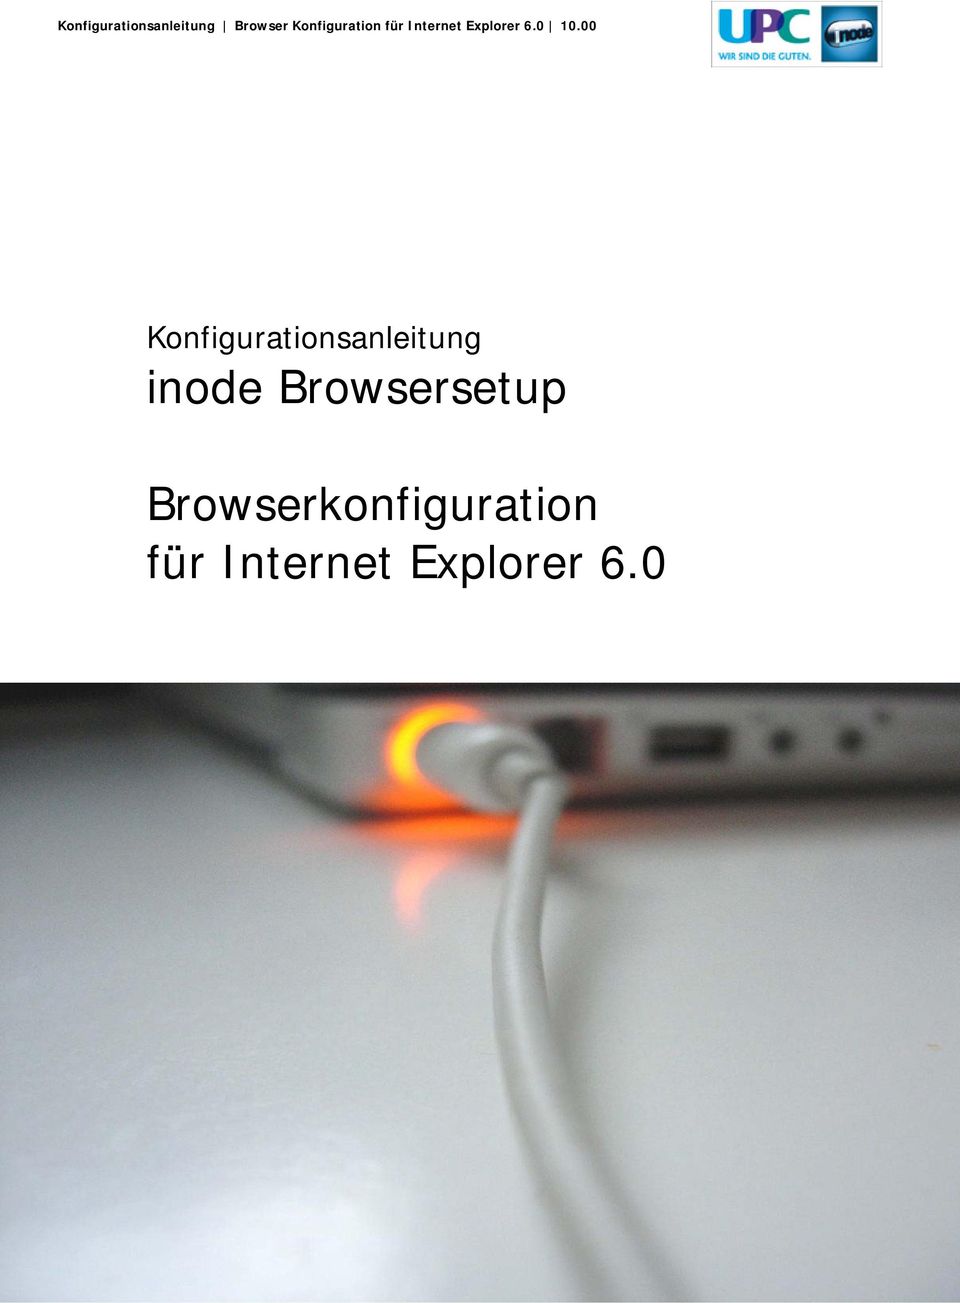 Browserkonfiguration